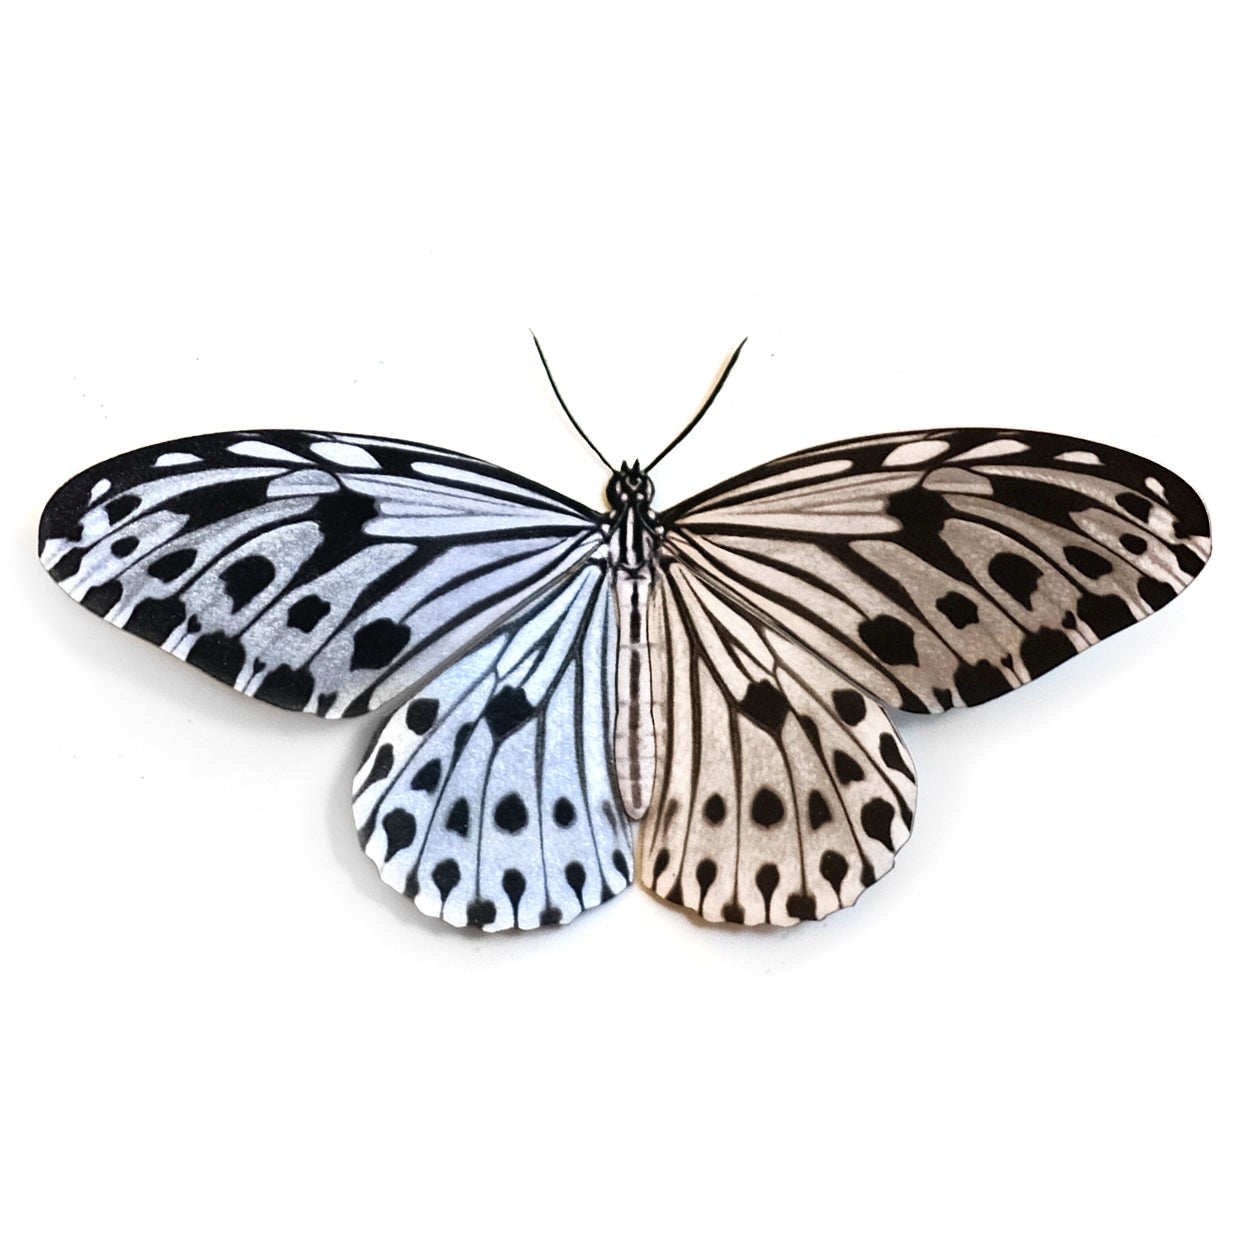 'Malabar Tree Nymph' Butterfly